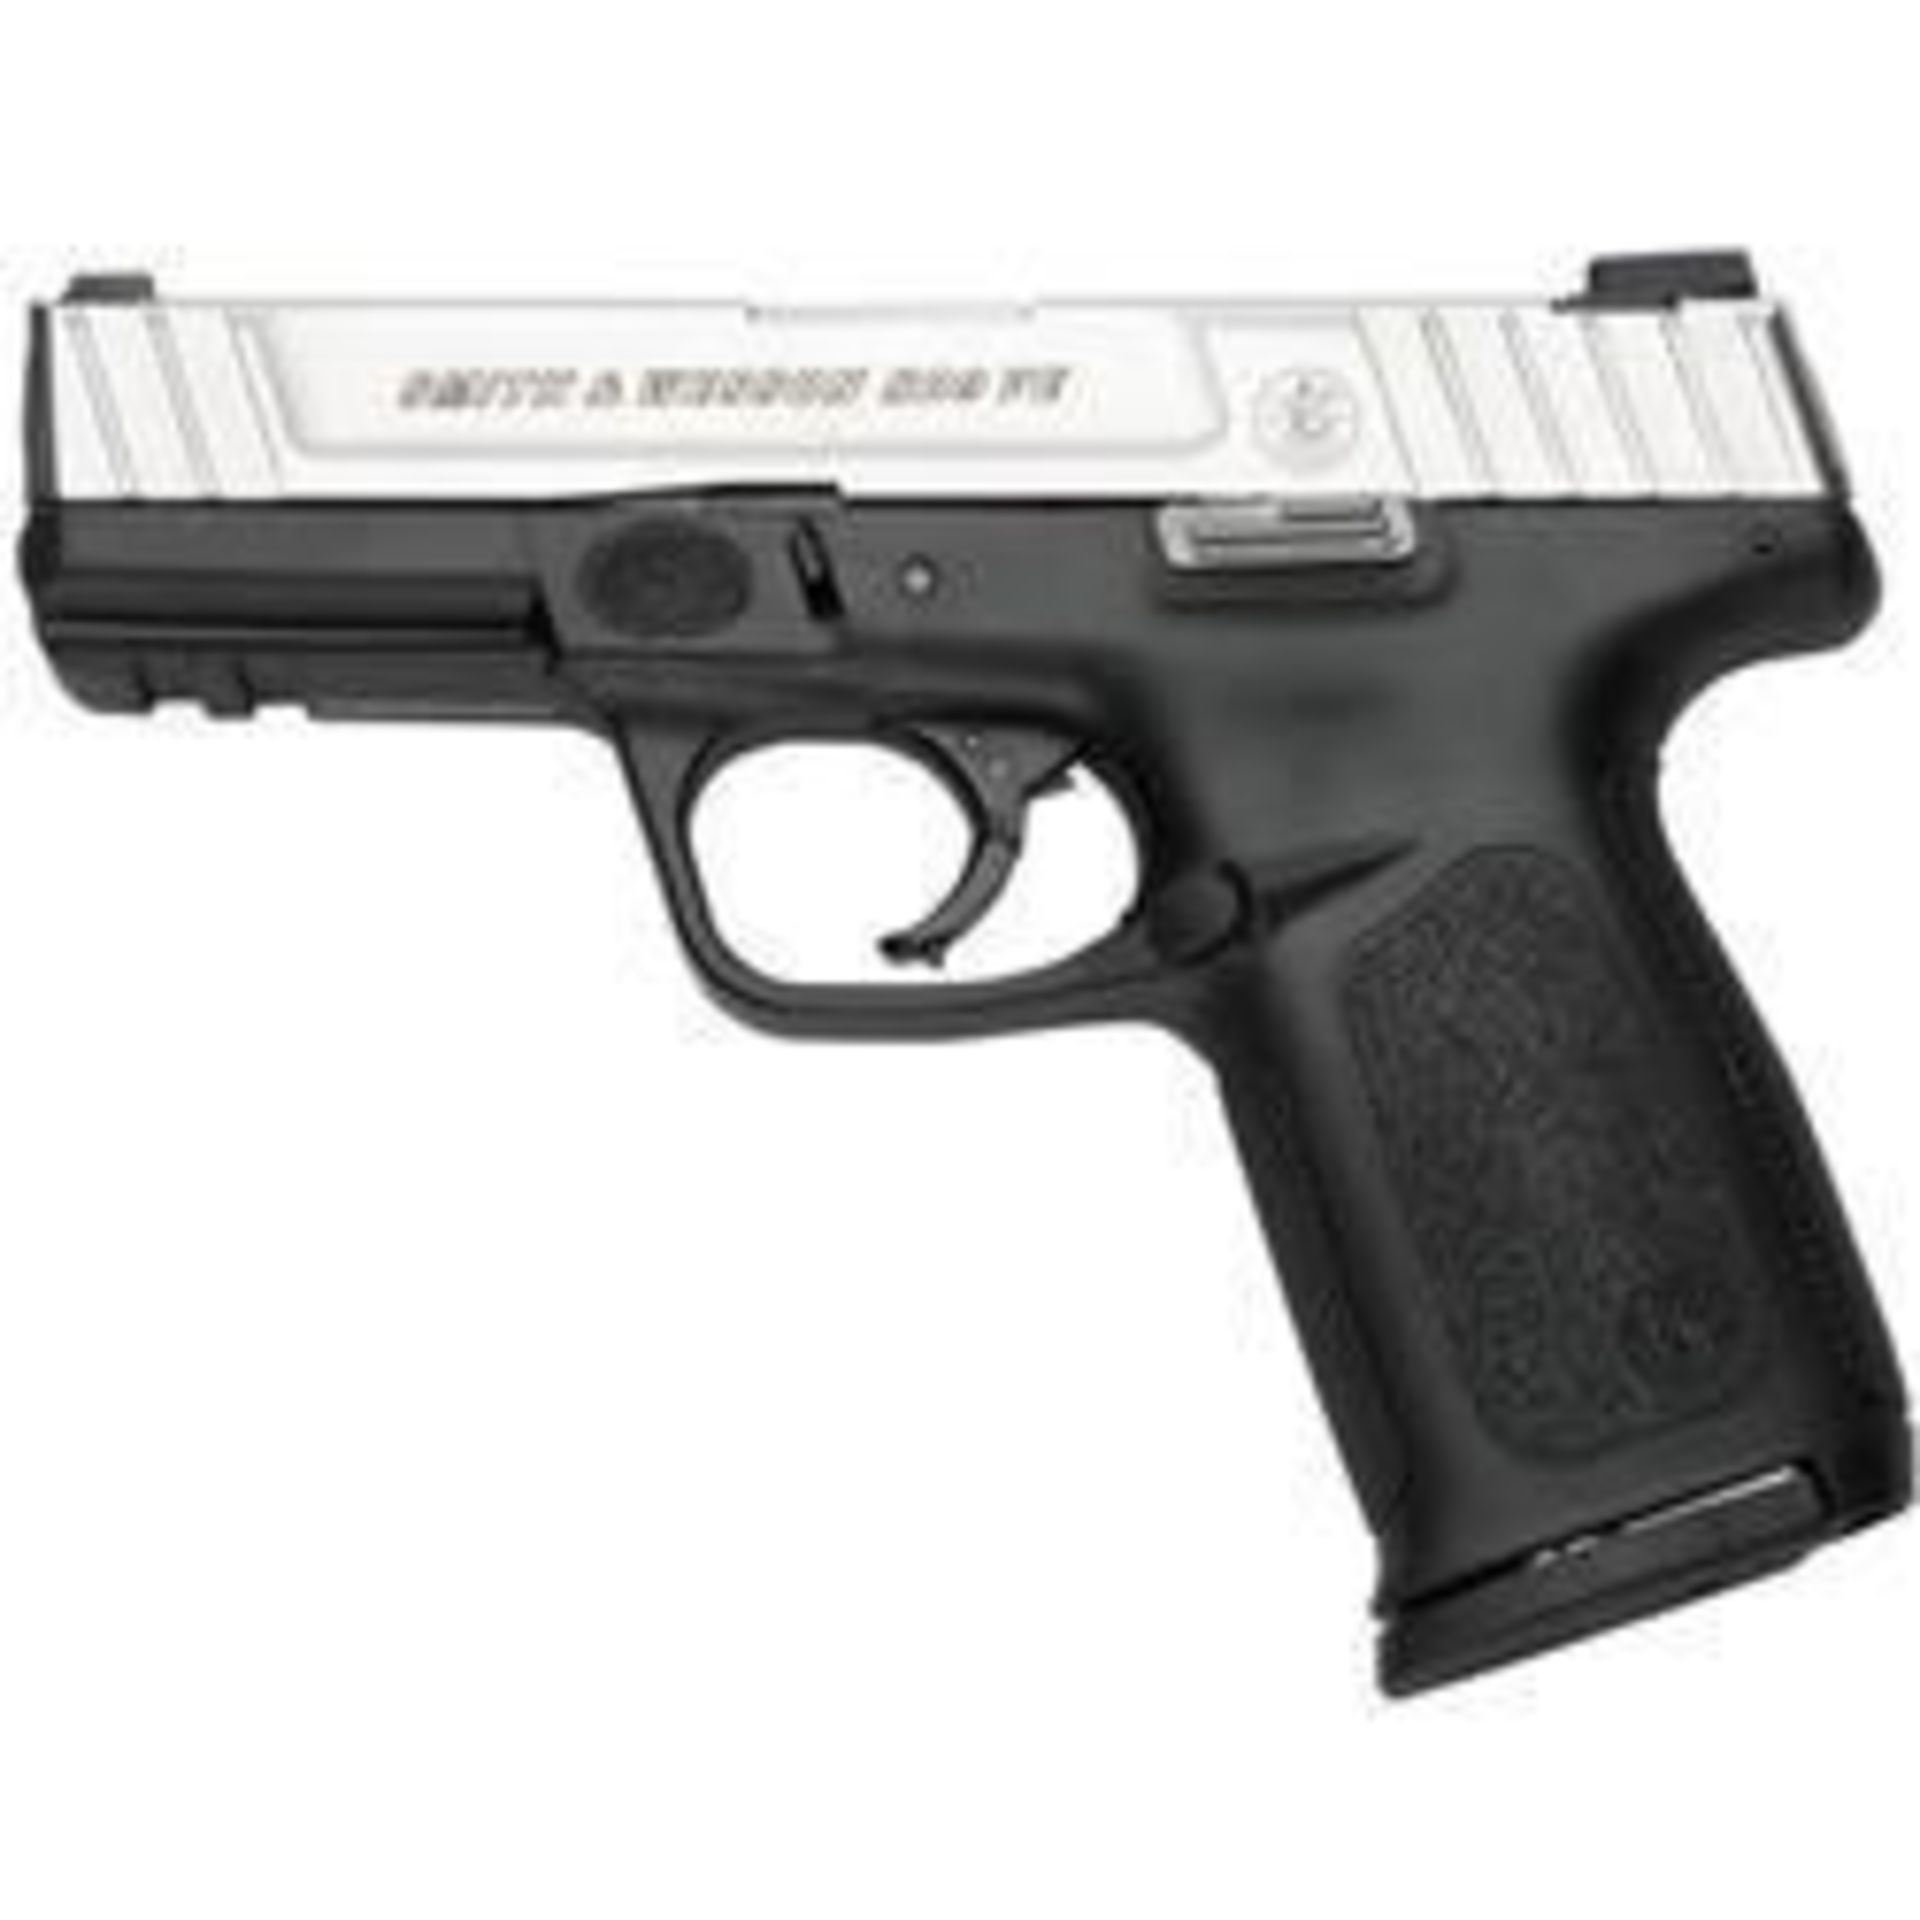 NEW!! Smith & Wesson 123900 SD VE 9mm 4" 10+1 Blk Poly Grip Black Frame/SS Slide 022188239003